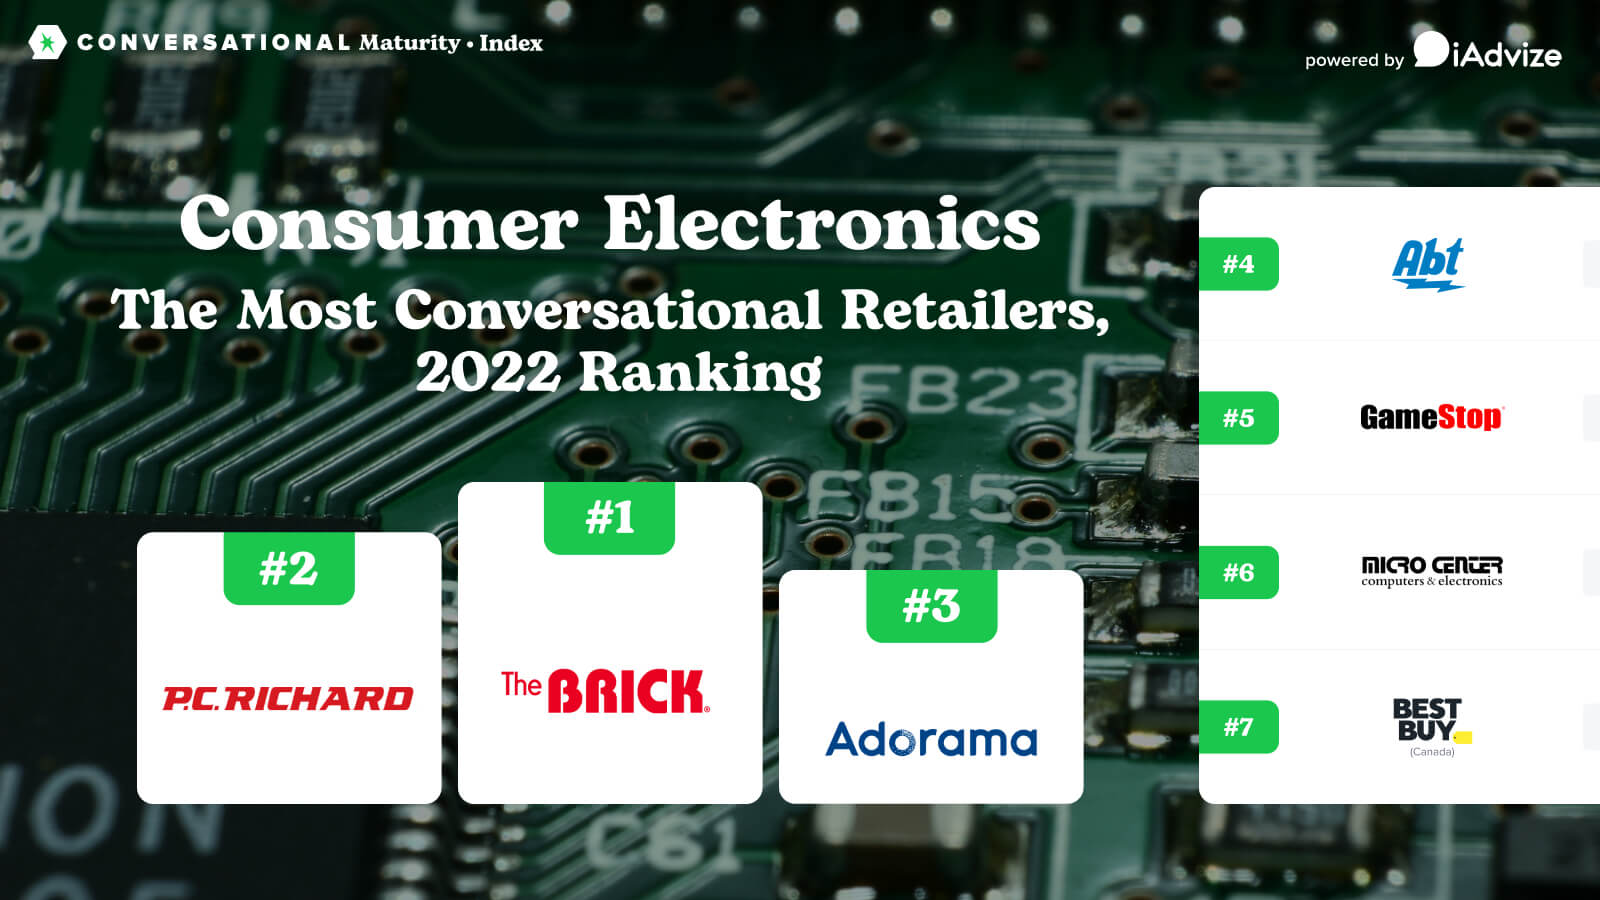 Conversational Maturity Index: Consumer Electronics Retailers 2022 Ranking